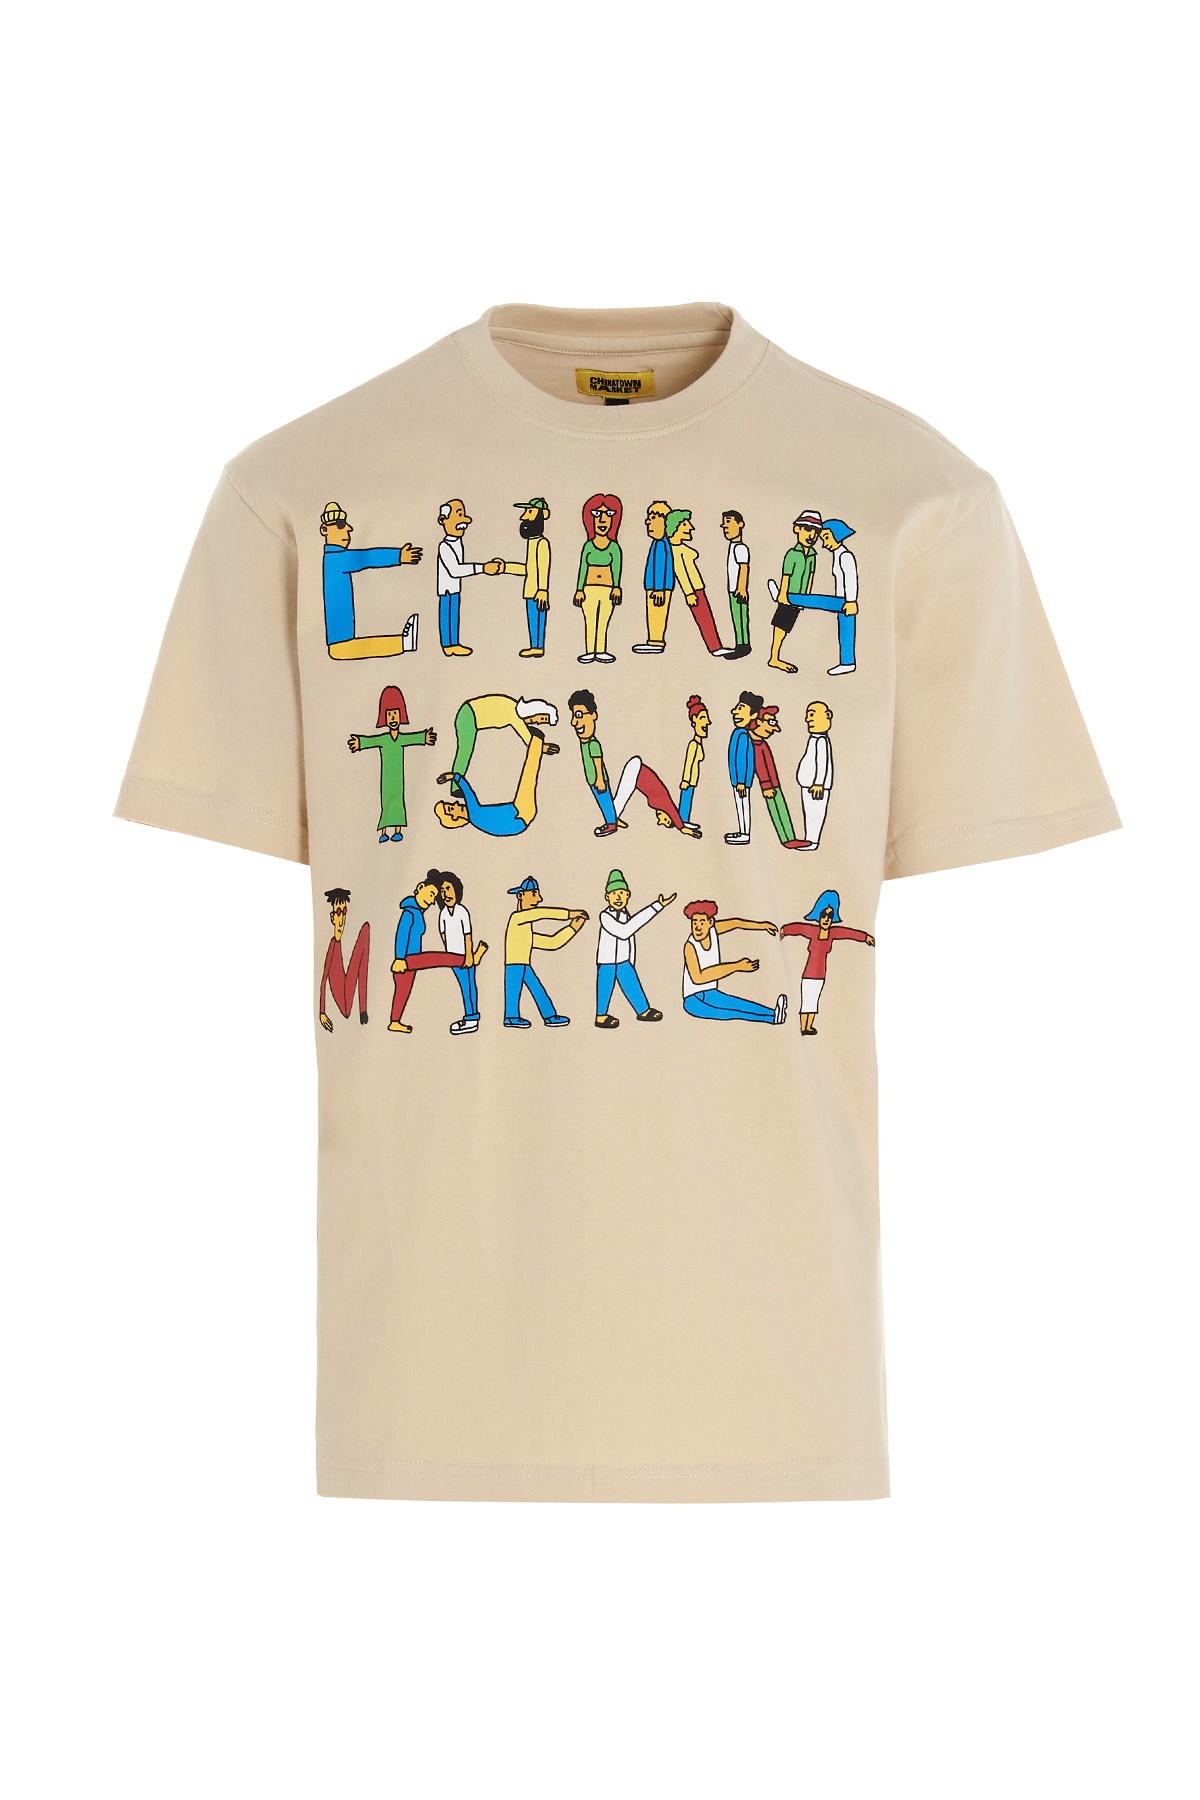 CHINATOWN MARKET City Aerobics' Capsule Printable T-Shirt